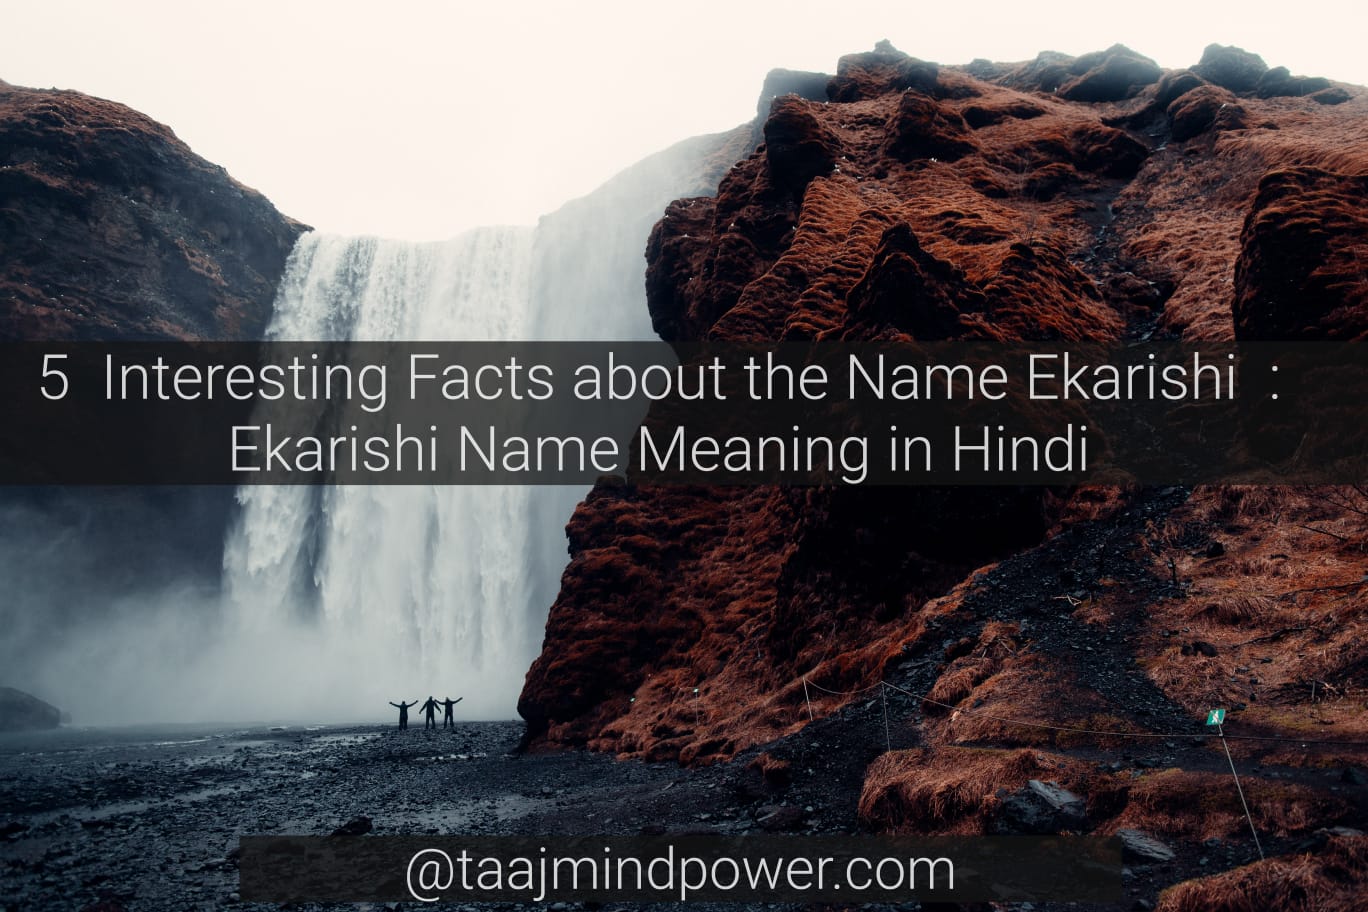 Ekarishi Name Meaning in Hindi